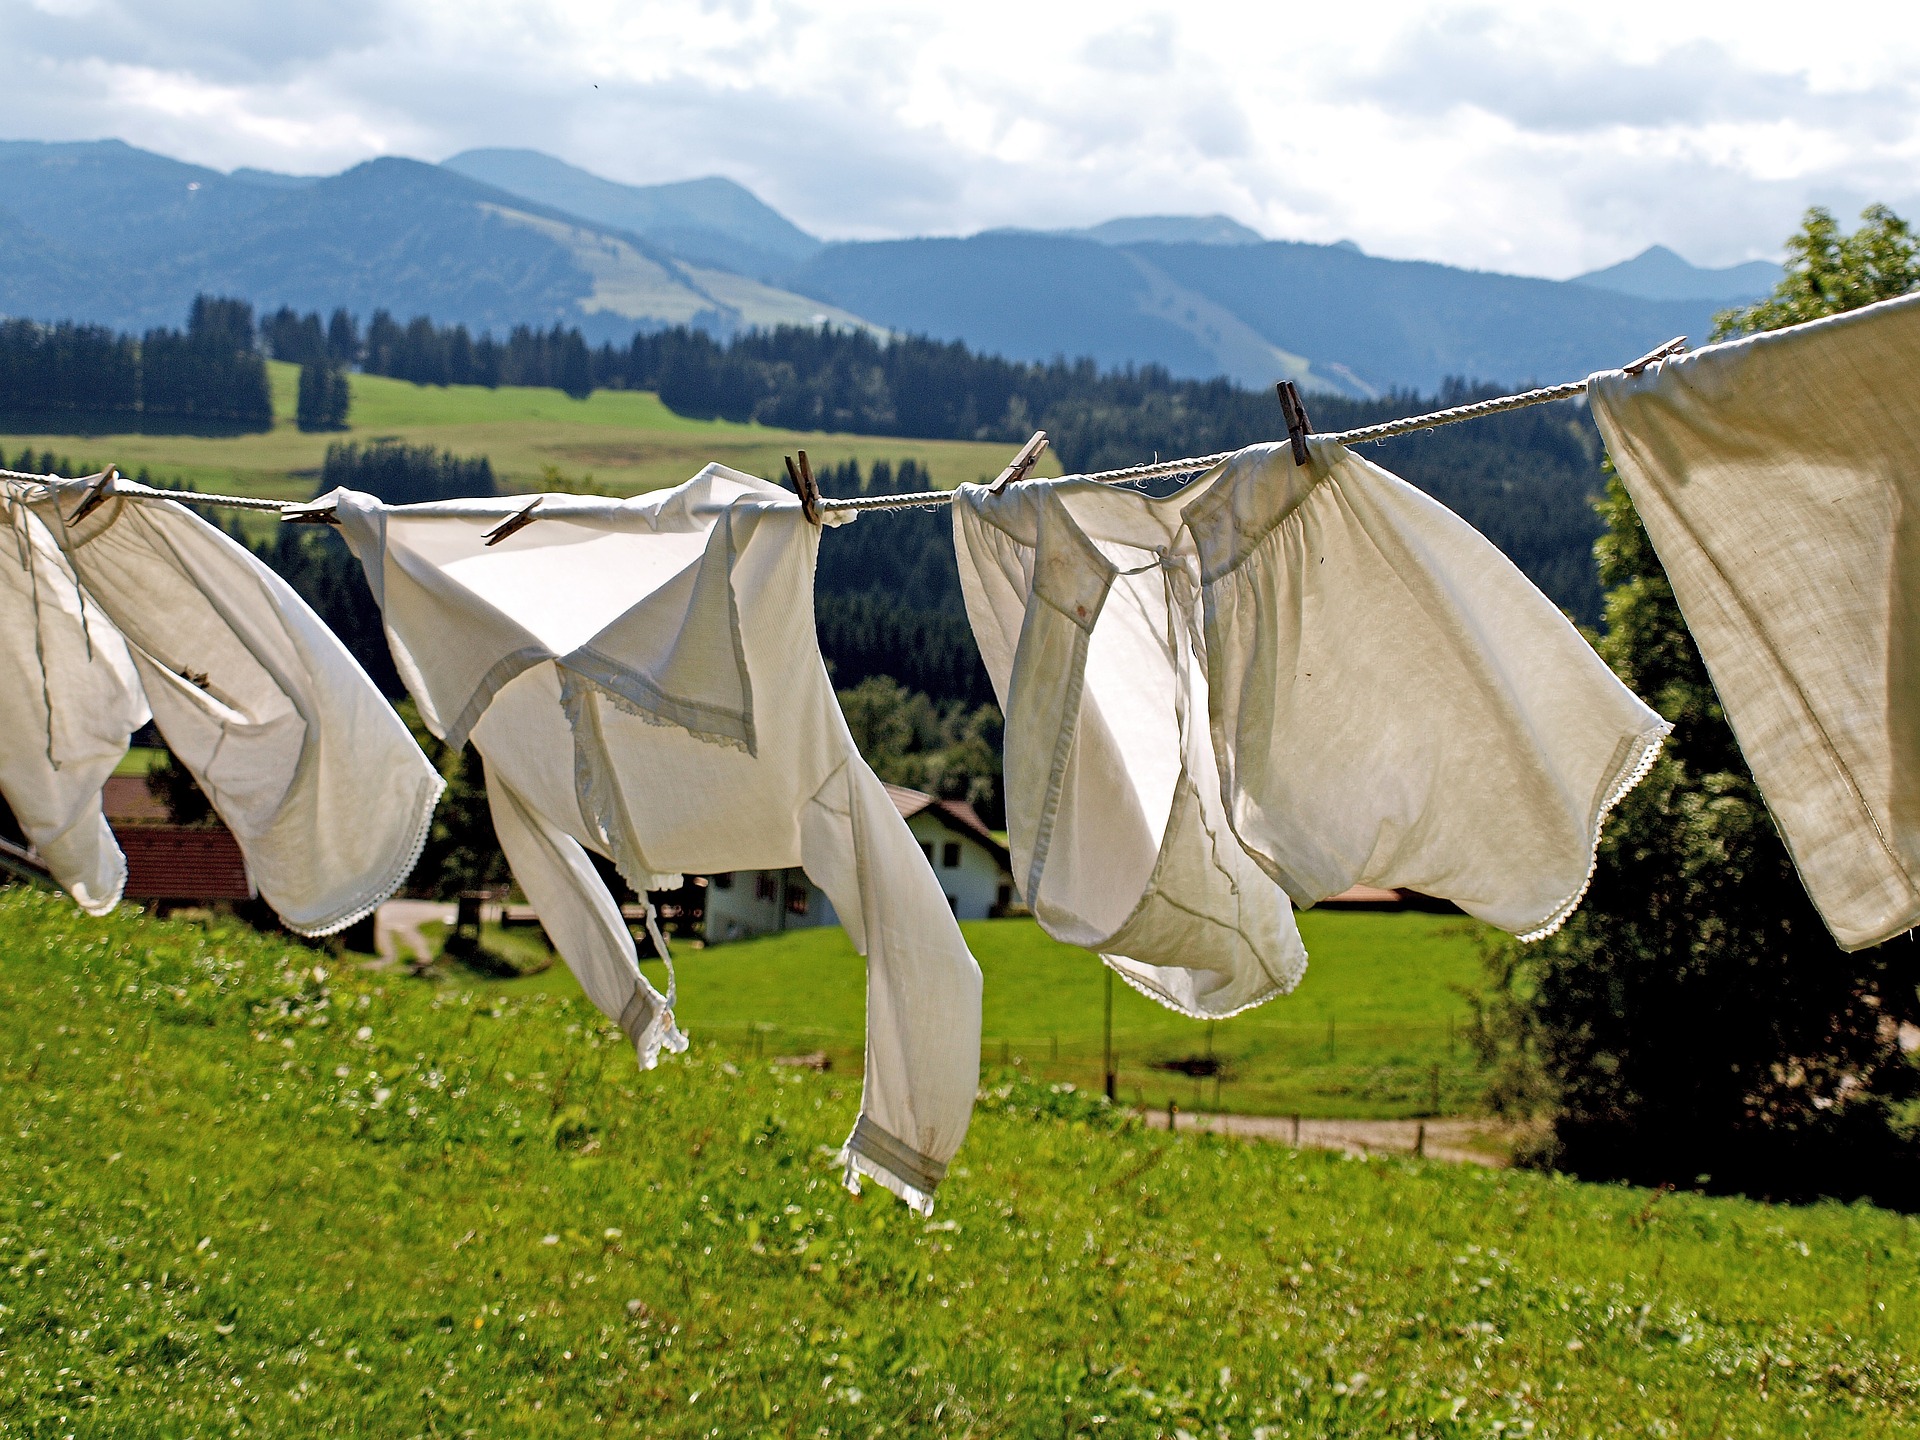 Shirts drying on a washing line